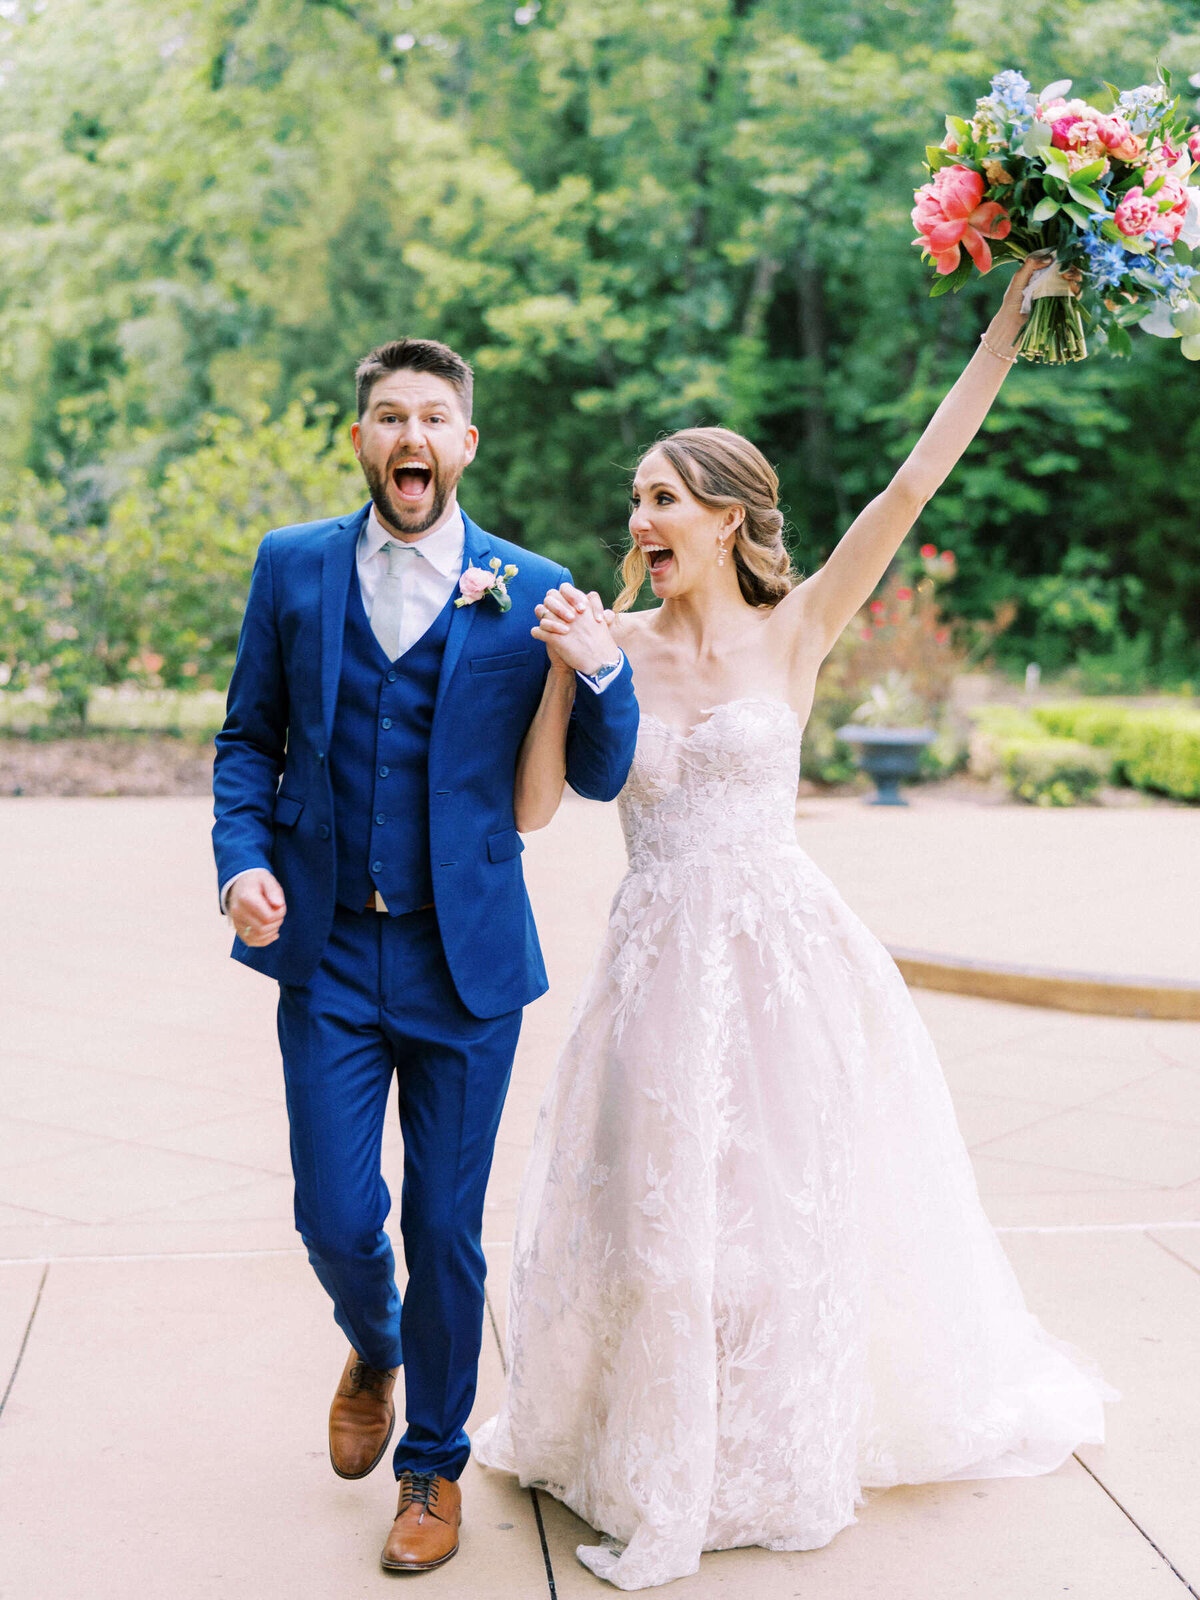 Joyful bride and groom celebrate their new marriage in Dallas Texas at Ashton Gardens